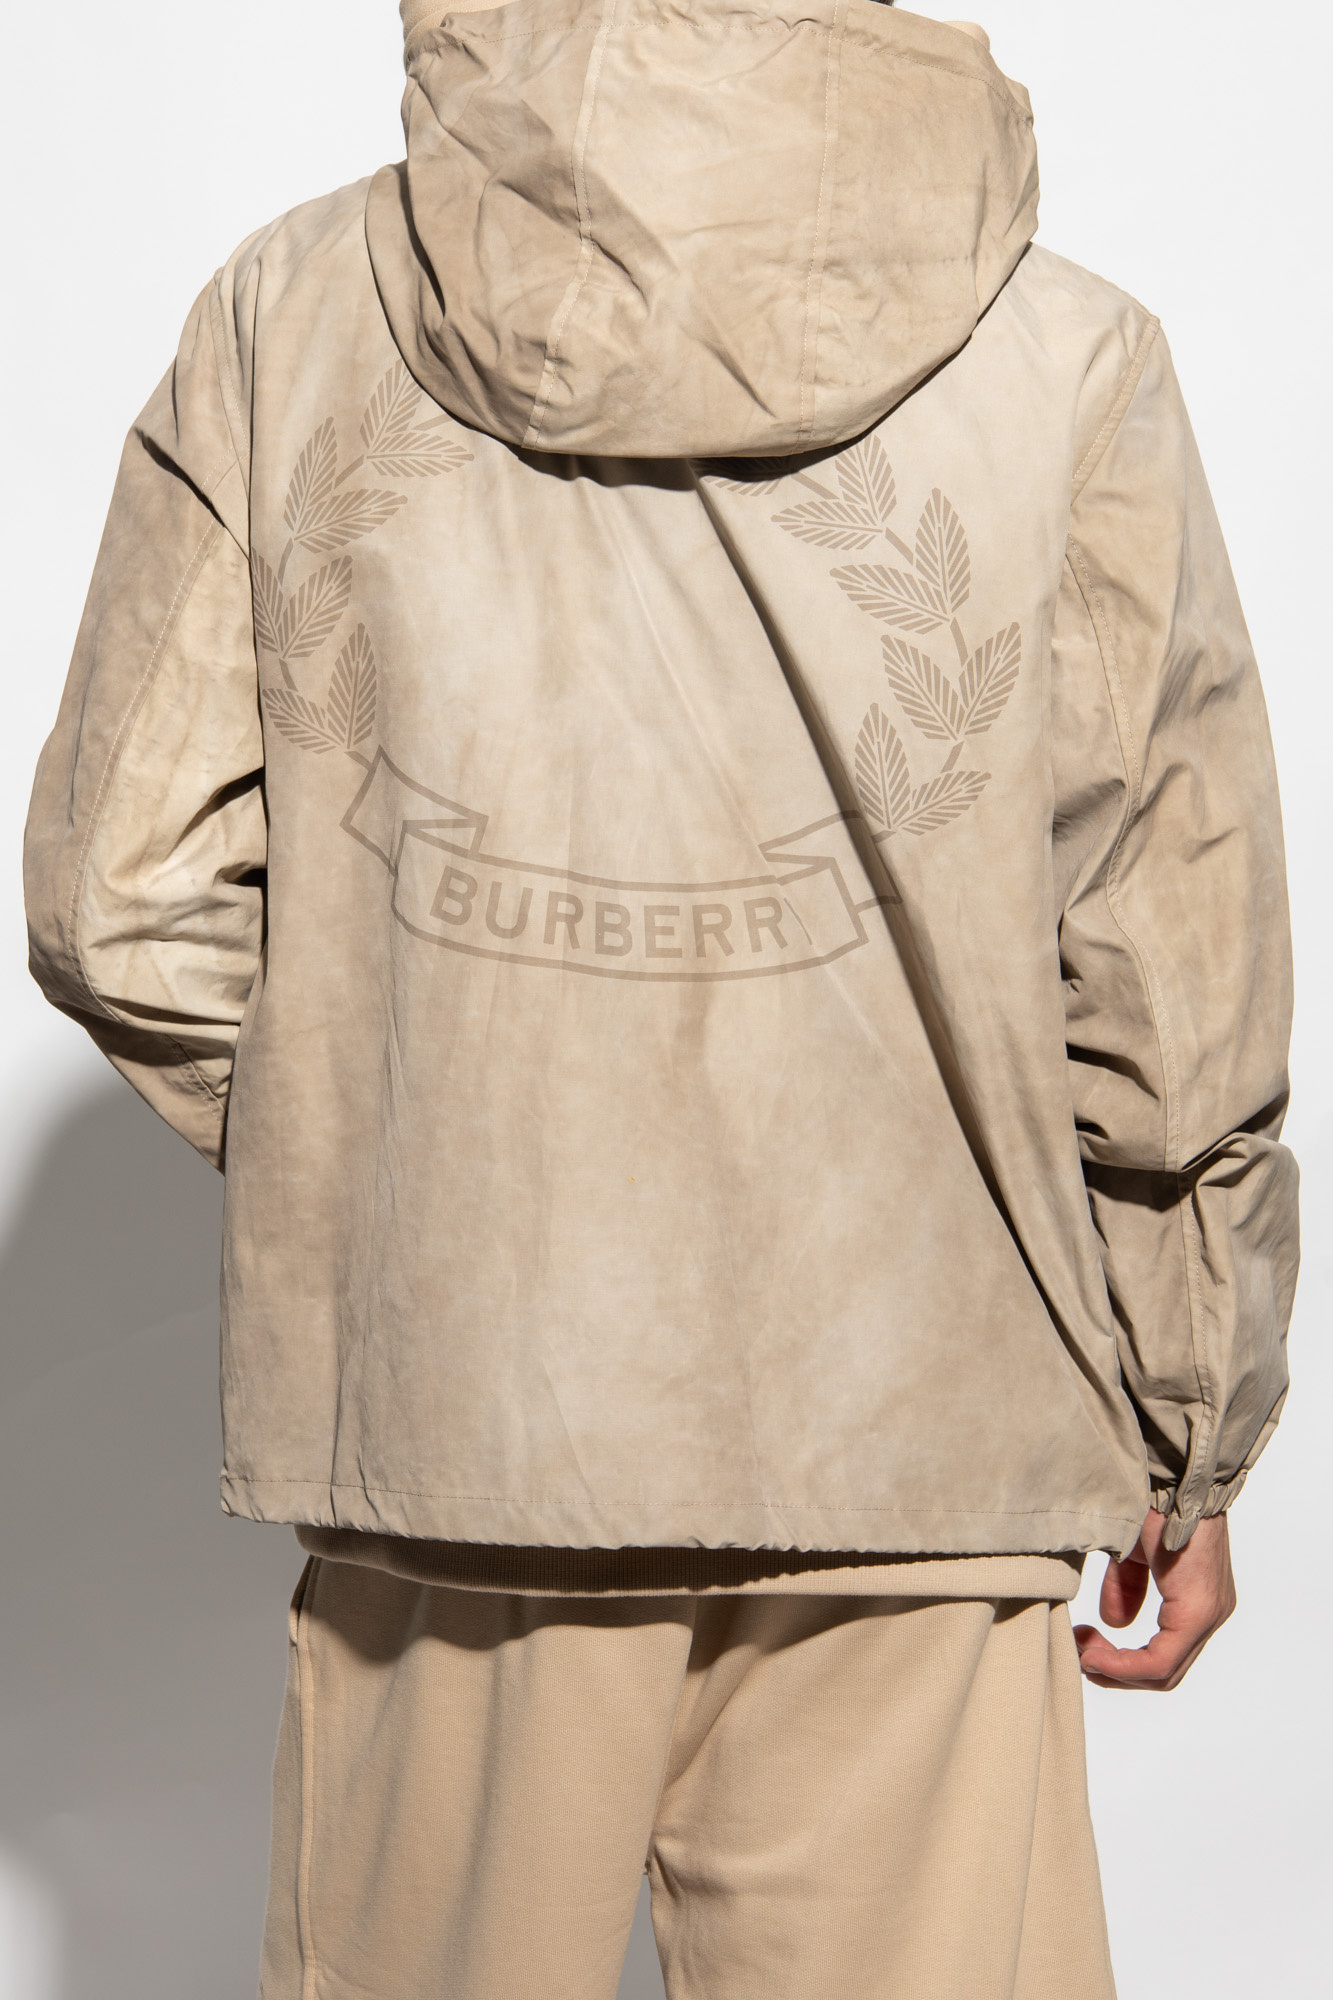 Burberry ‘Hackney’ jacket with logo